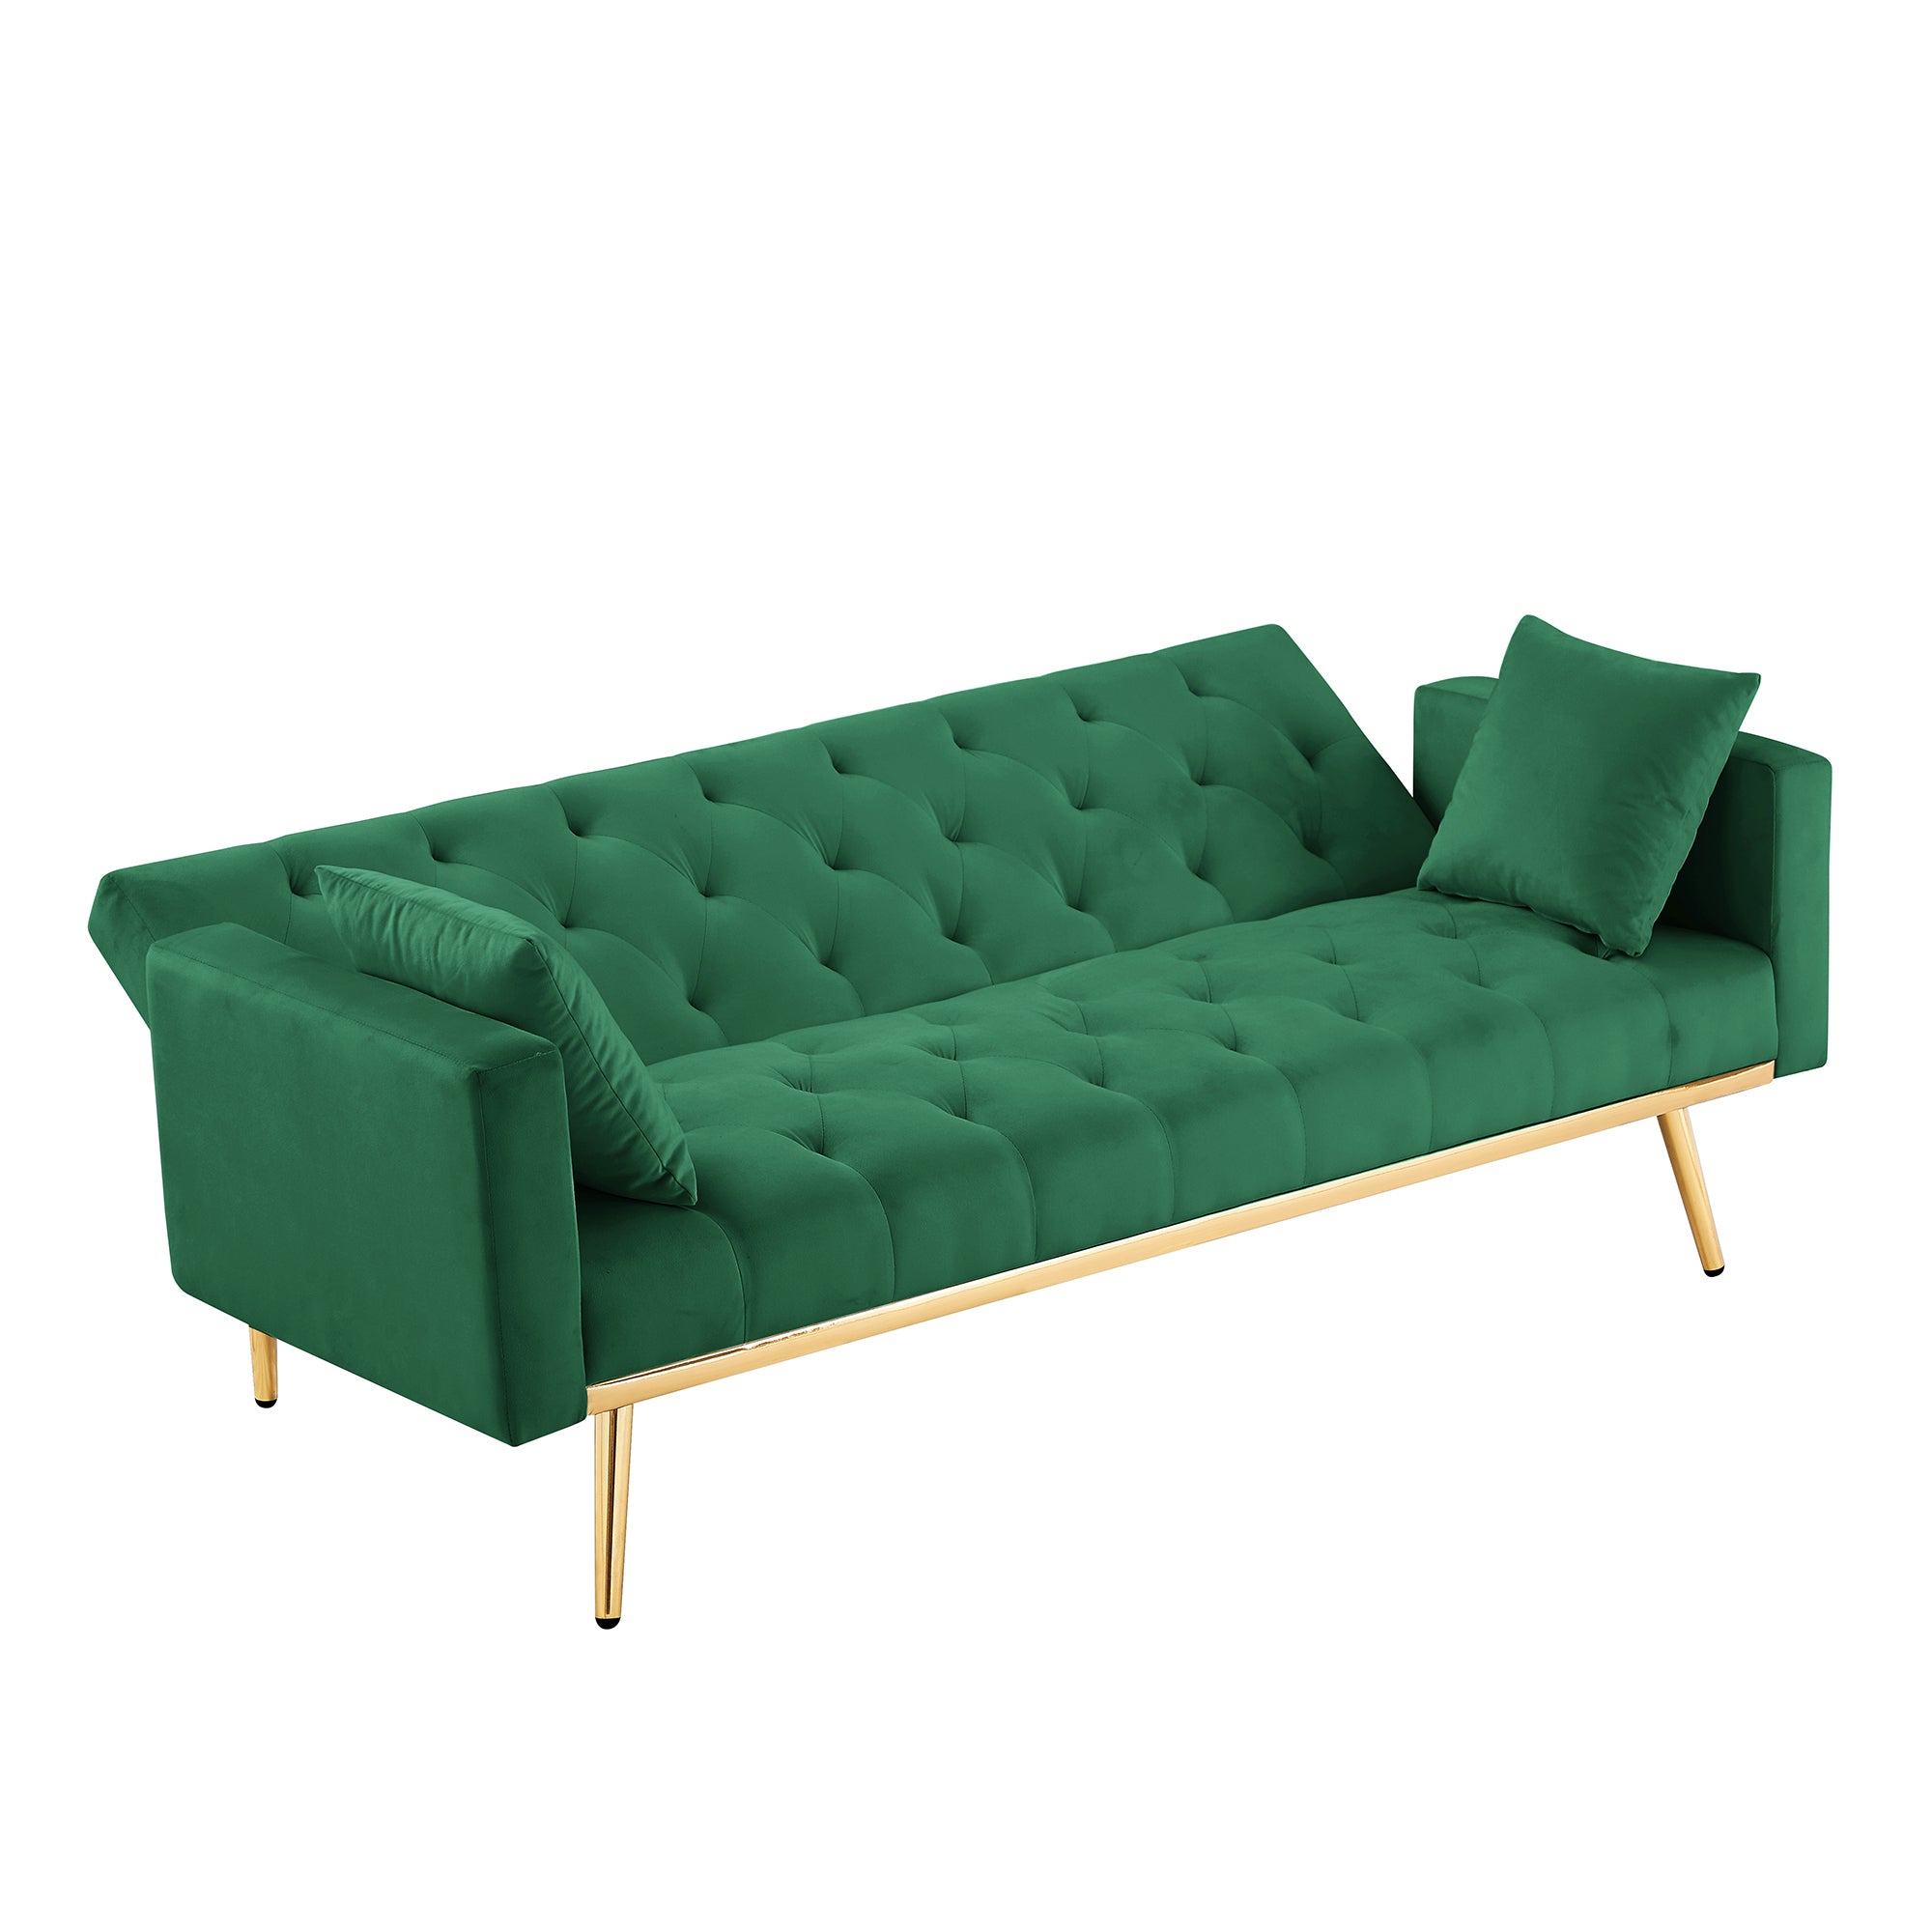 Convertible Folding Futon Sofa Bed (Green)